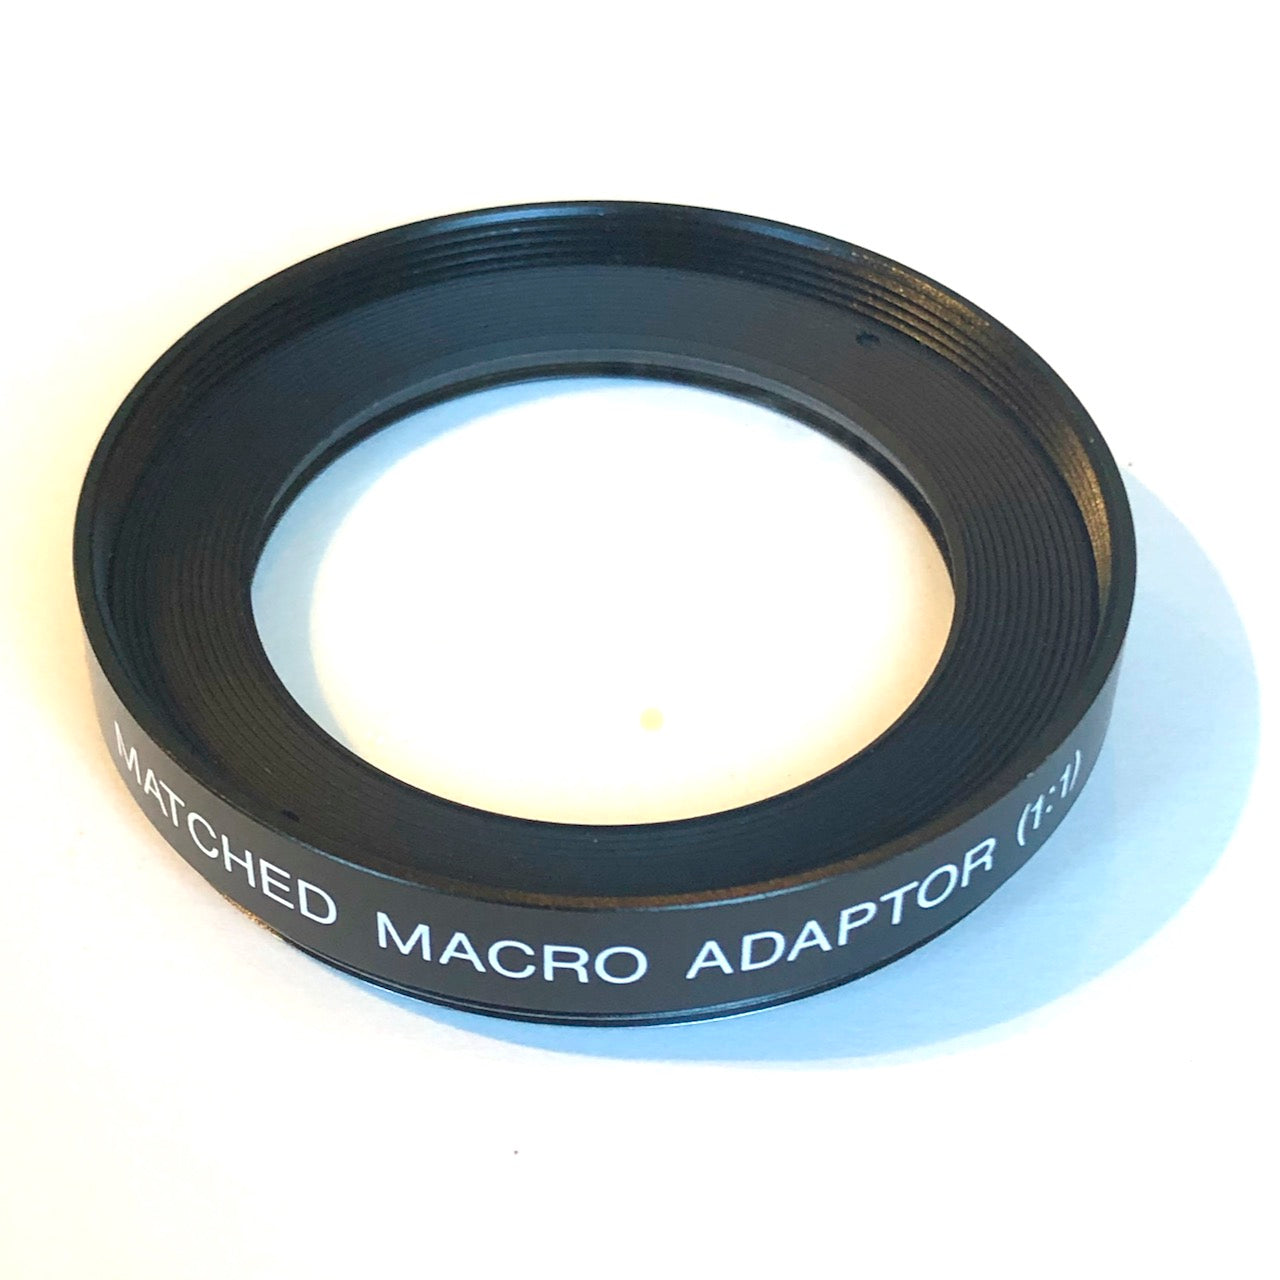 Cosina Matched Macro Adapter 1:1 (49mm)